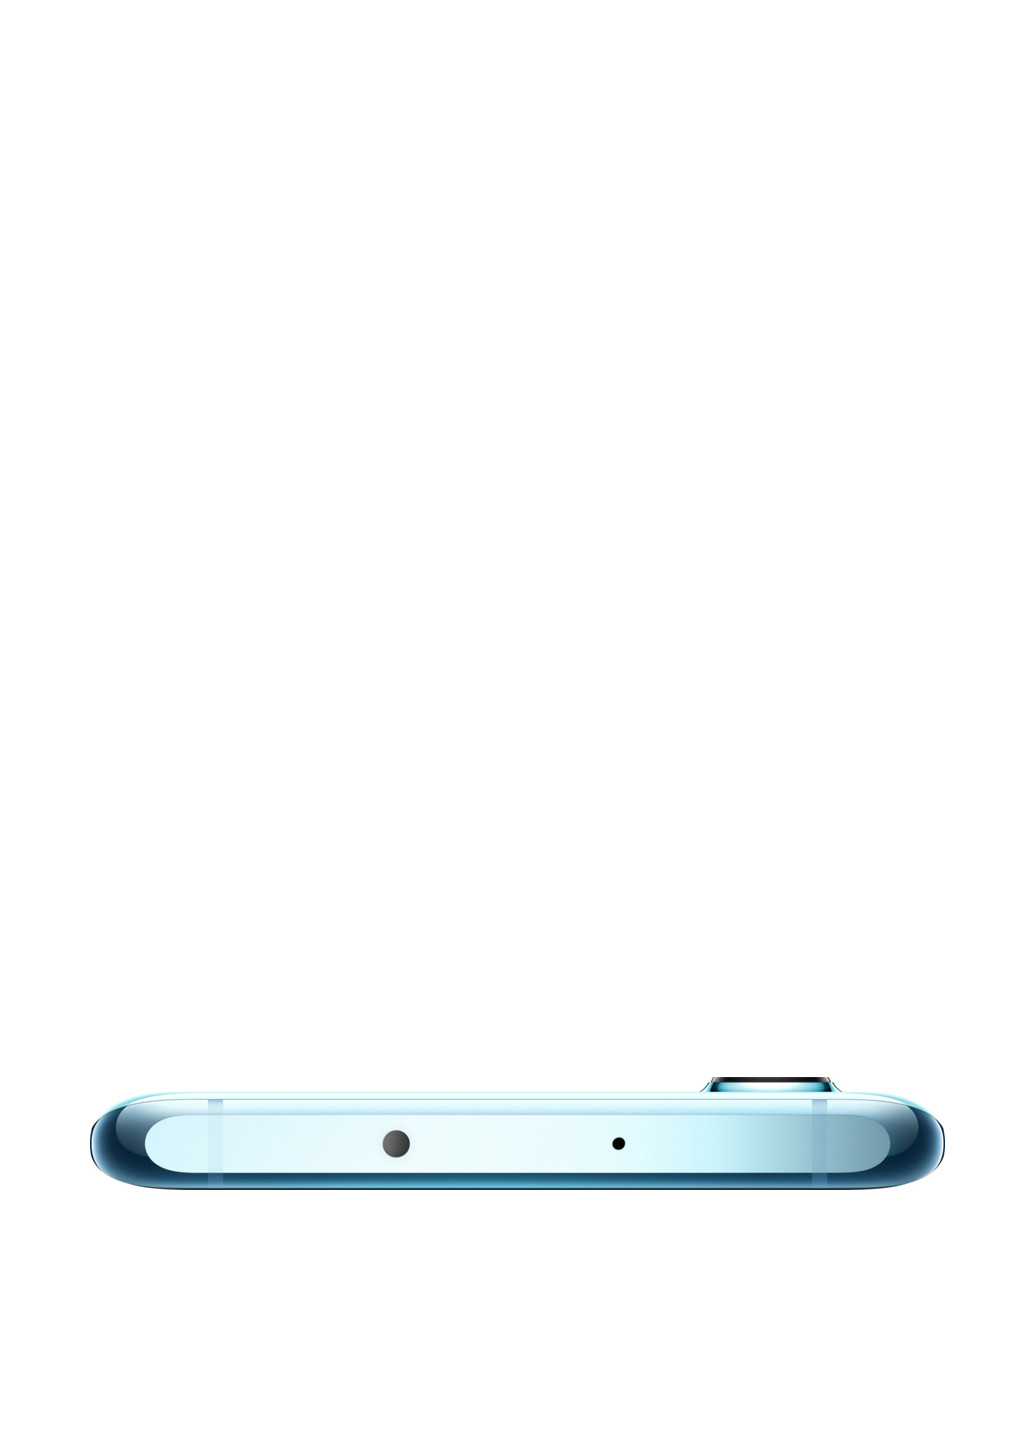 Смартфон P30 Pro 6 / 128GB Breathing Crystal (VOG-L29B) Huawei p30 pro 6/128gb breathing crystal (vog-l29b) (130284882)